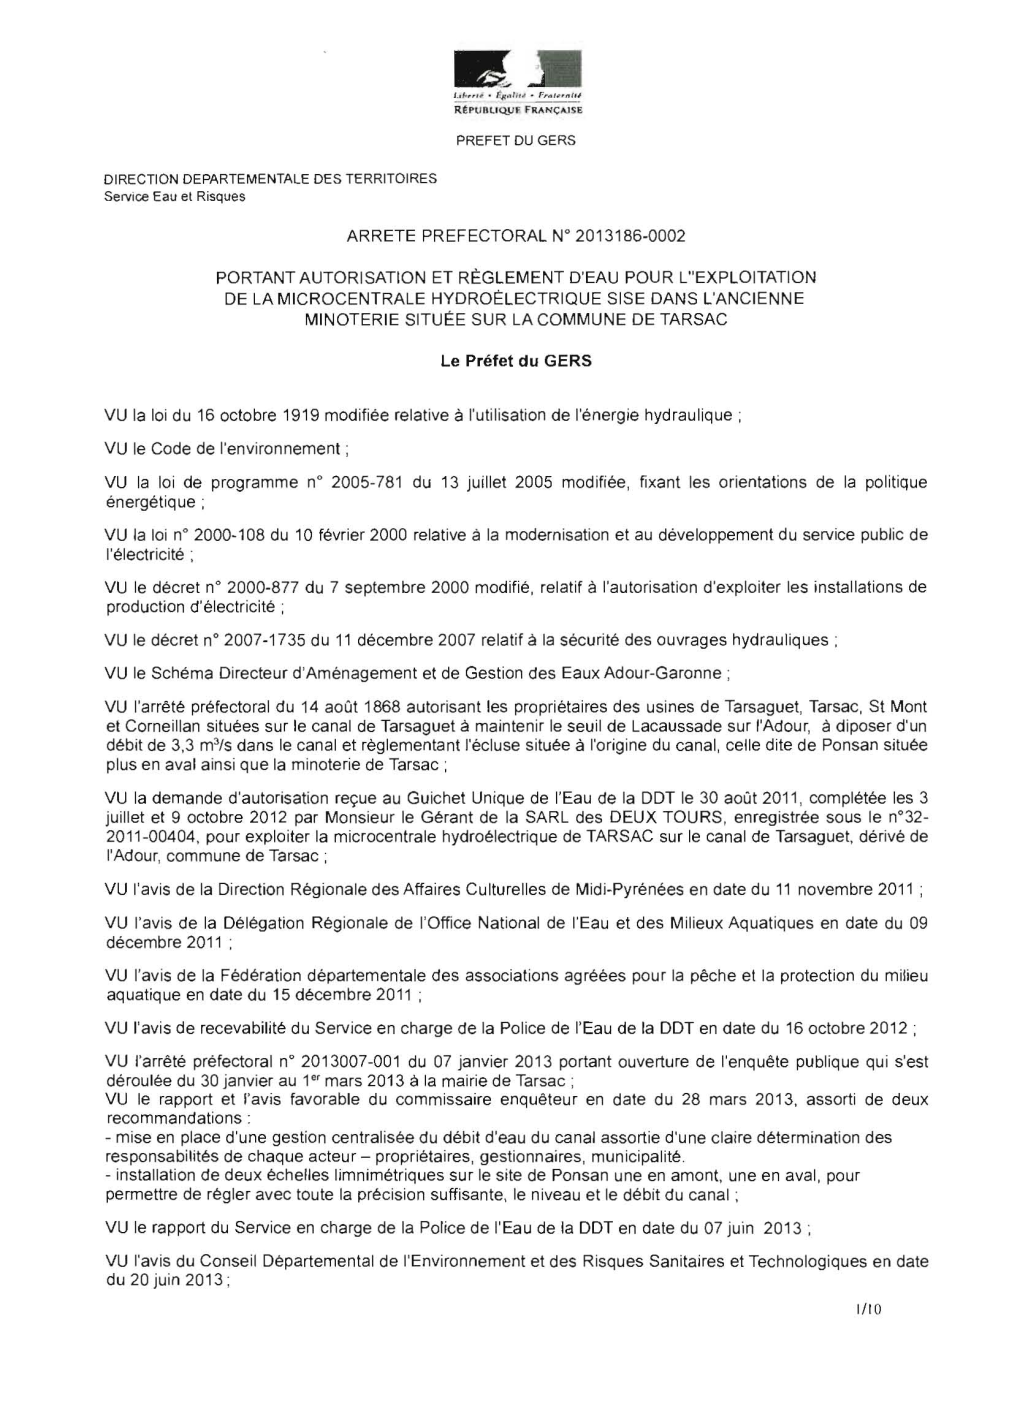 Arrete Prefectoral W 2013186-0002 Portant Autorisation